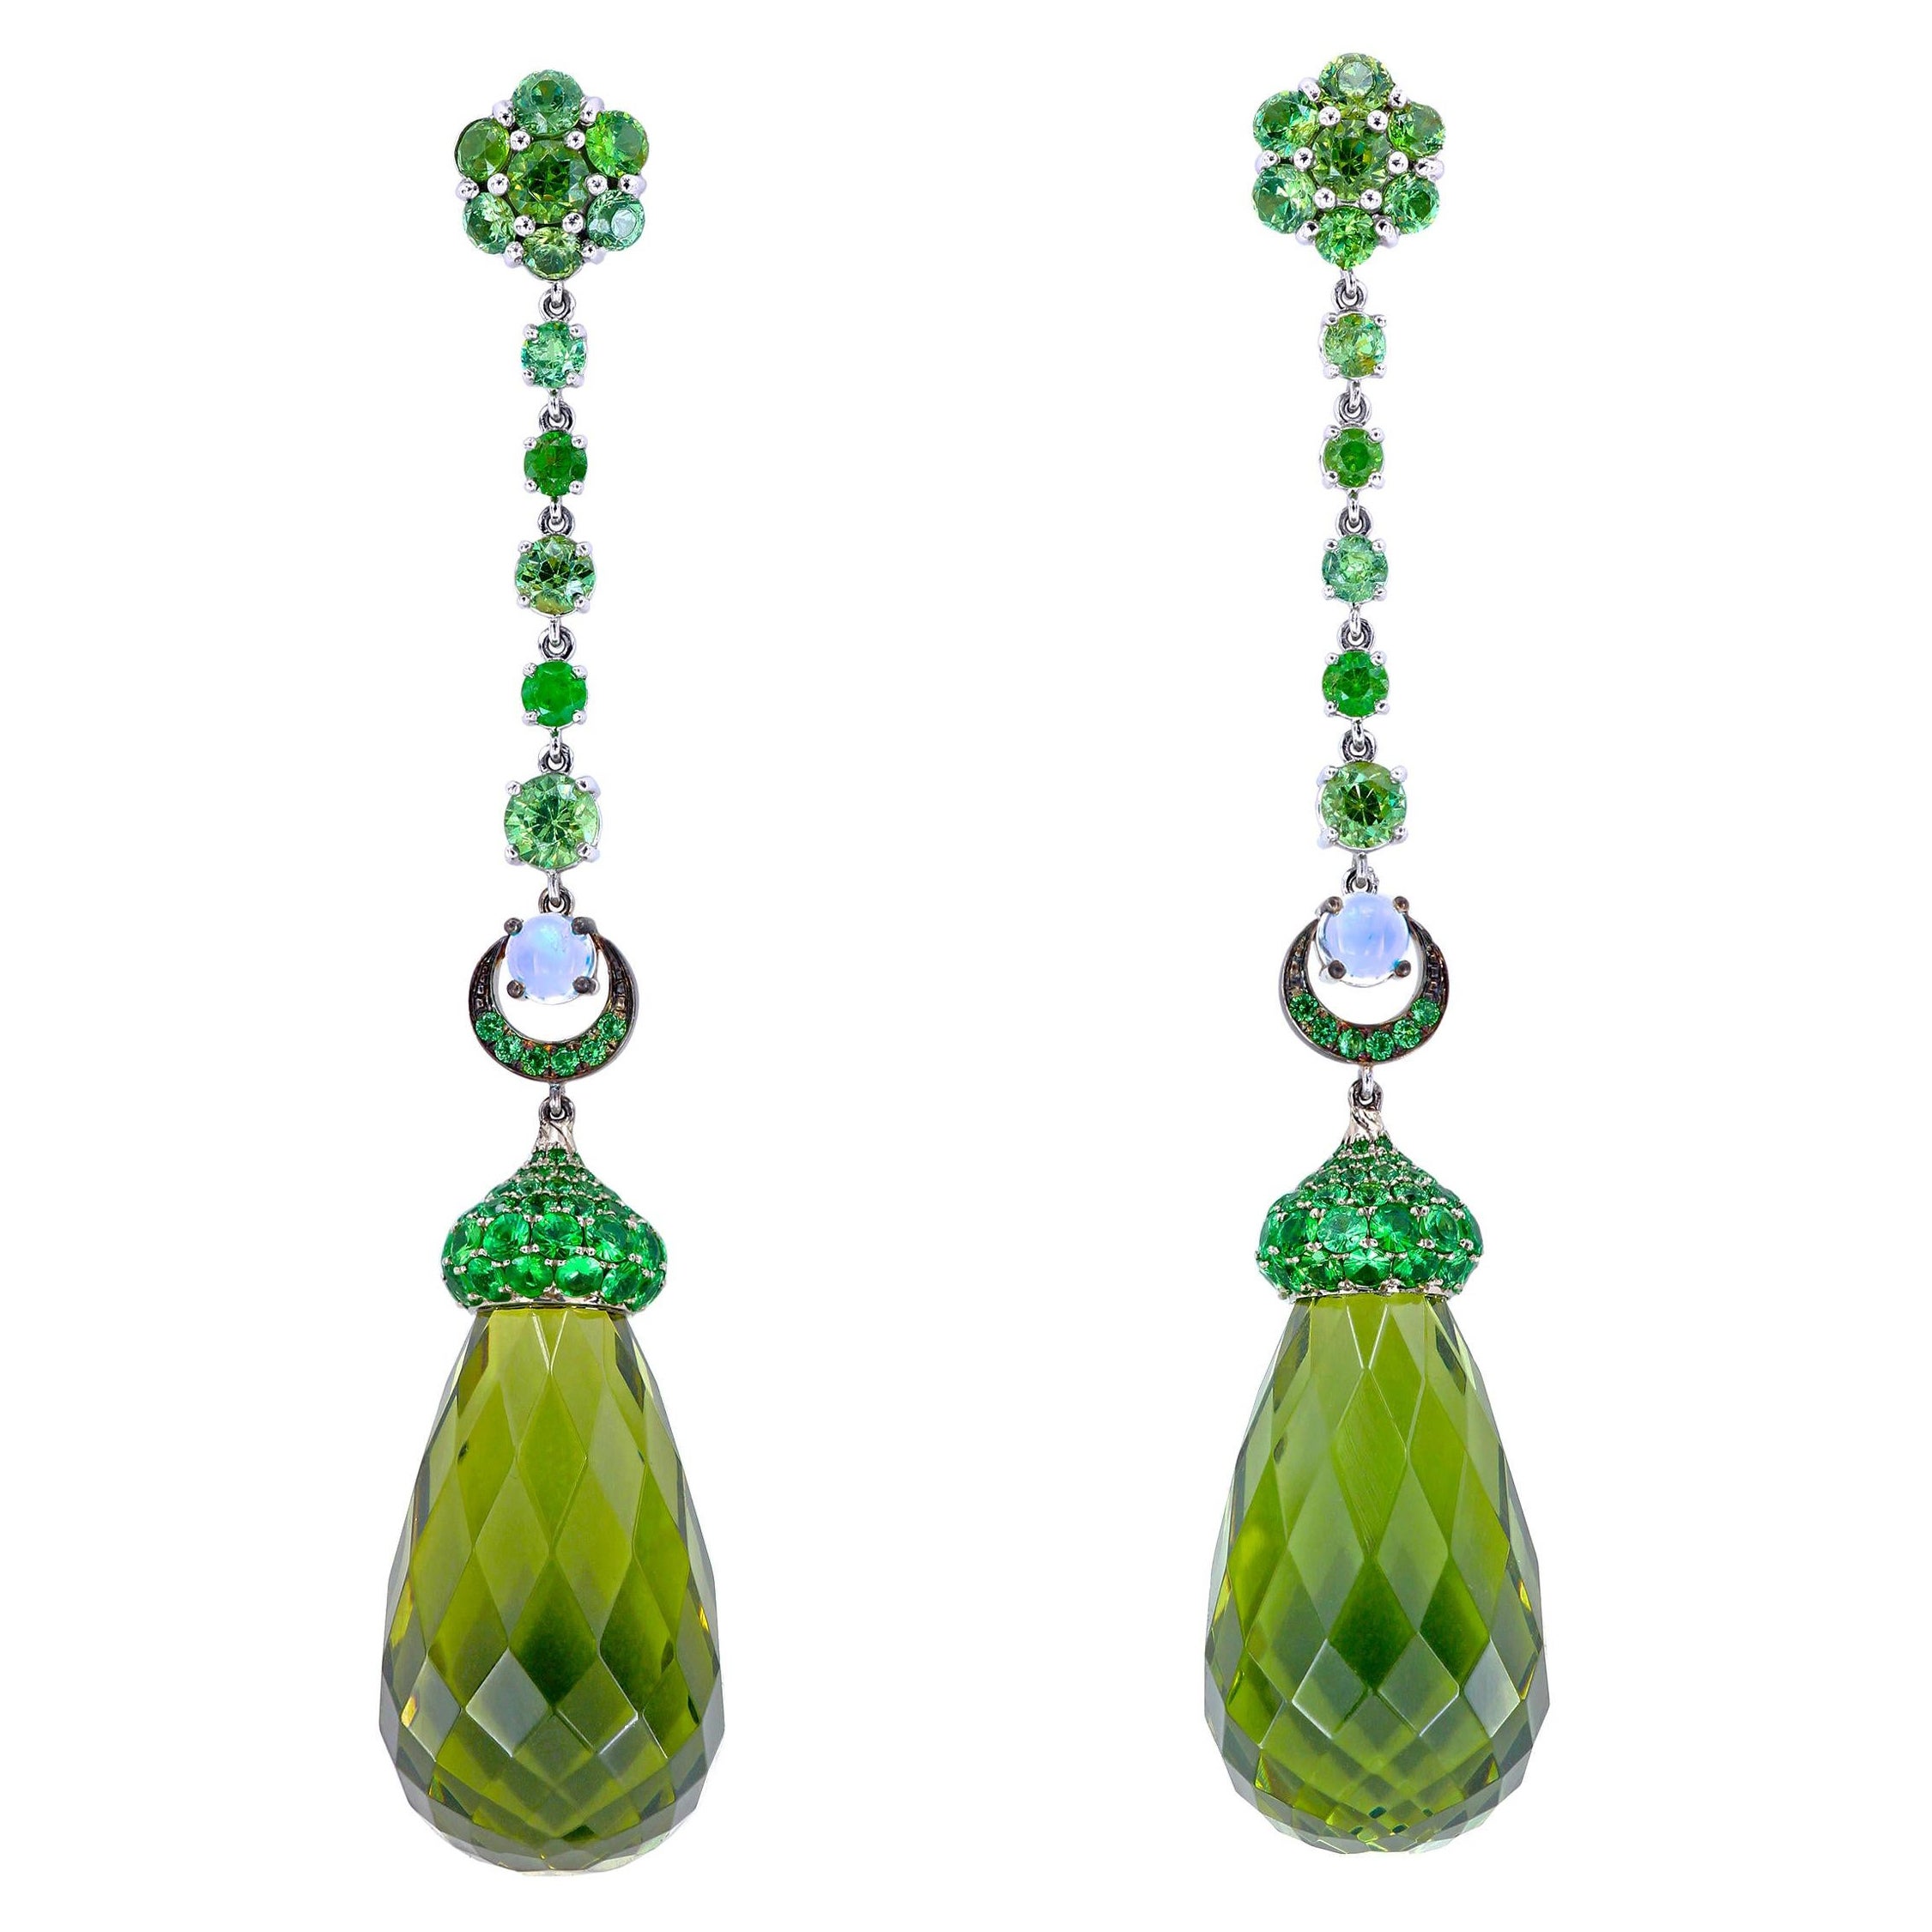 Leon Mege long drop earrings with green amber tsavorite, garnet and moonstones